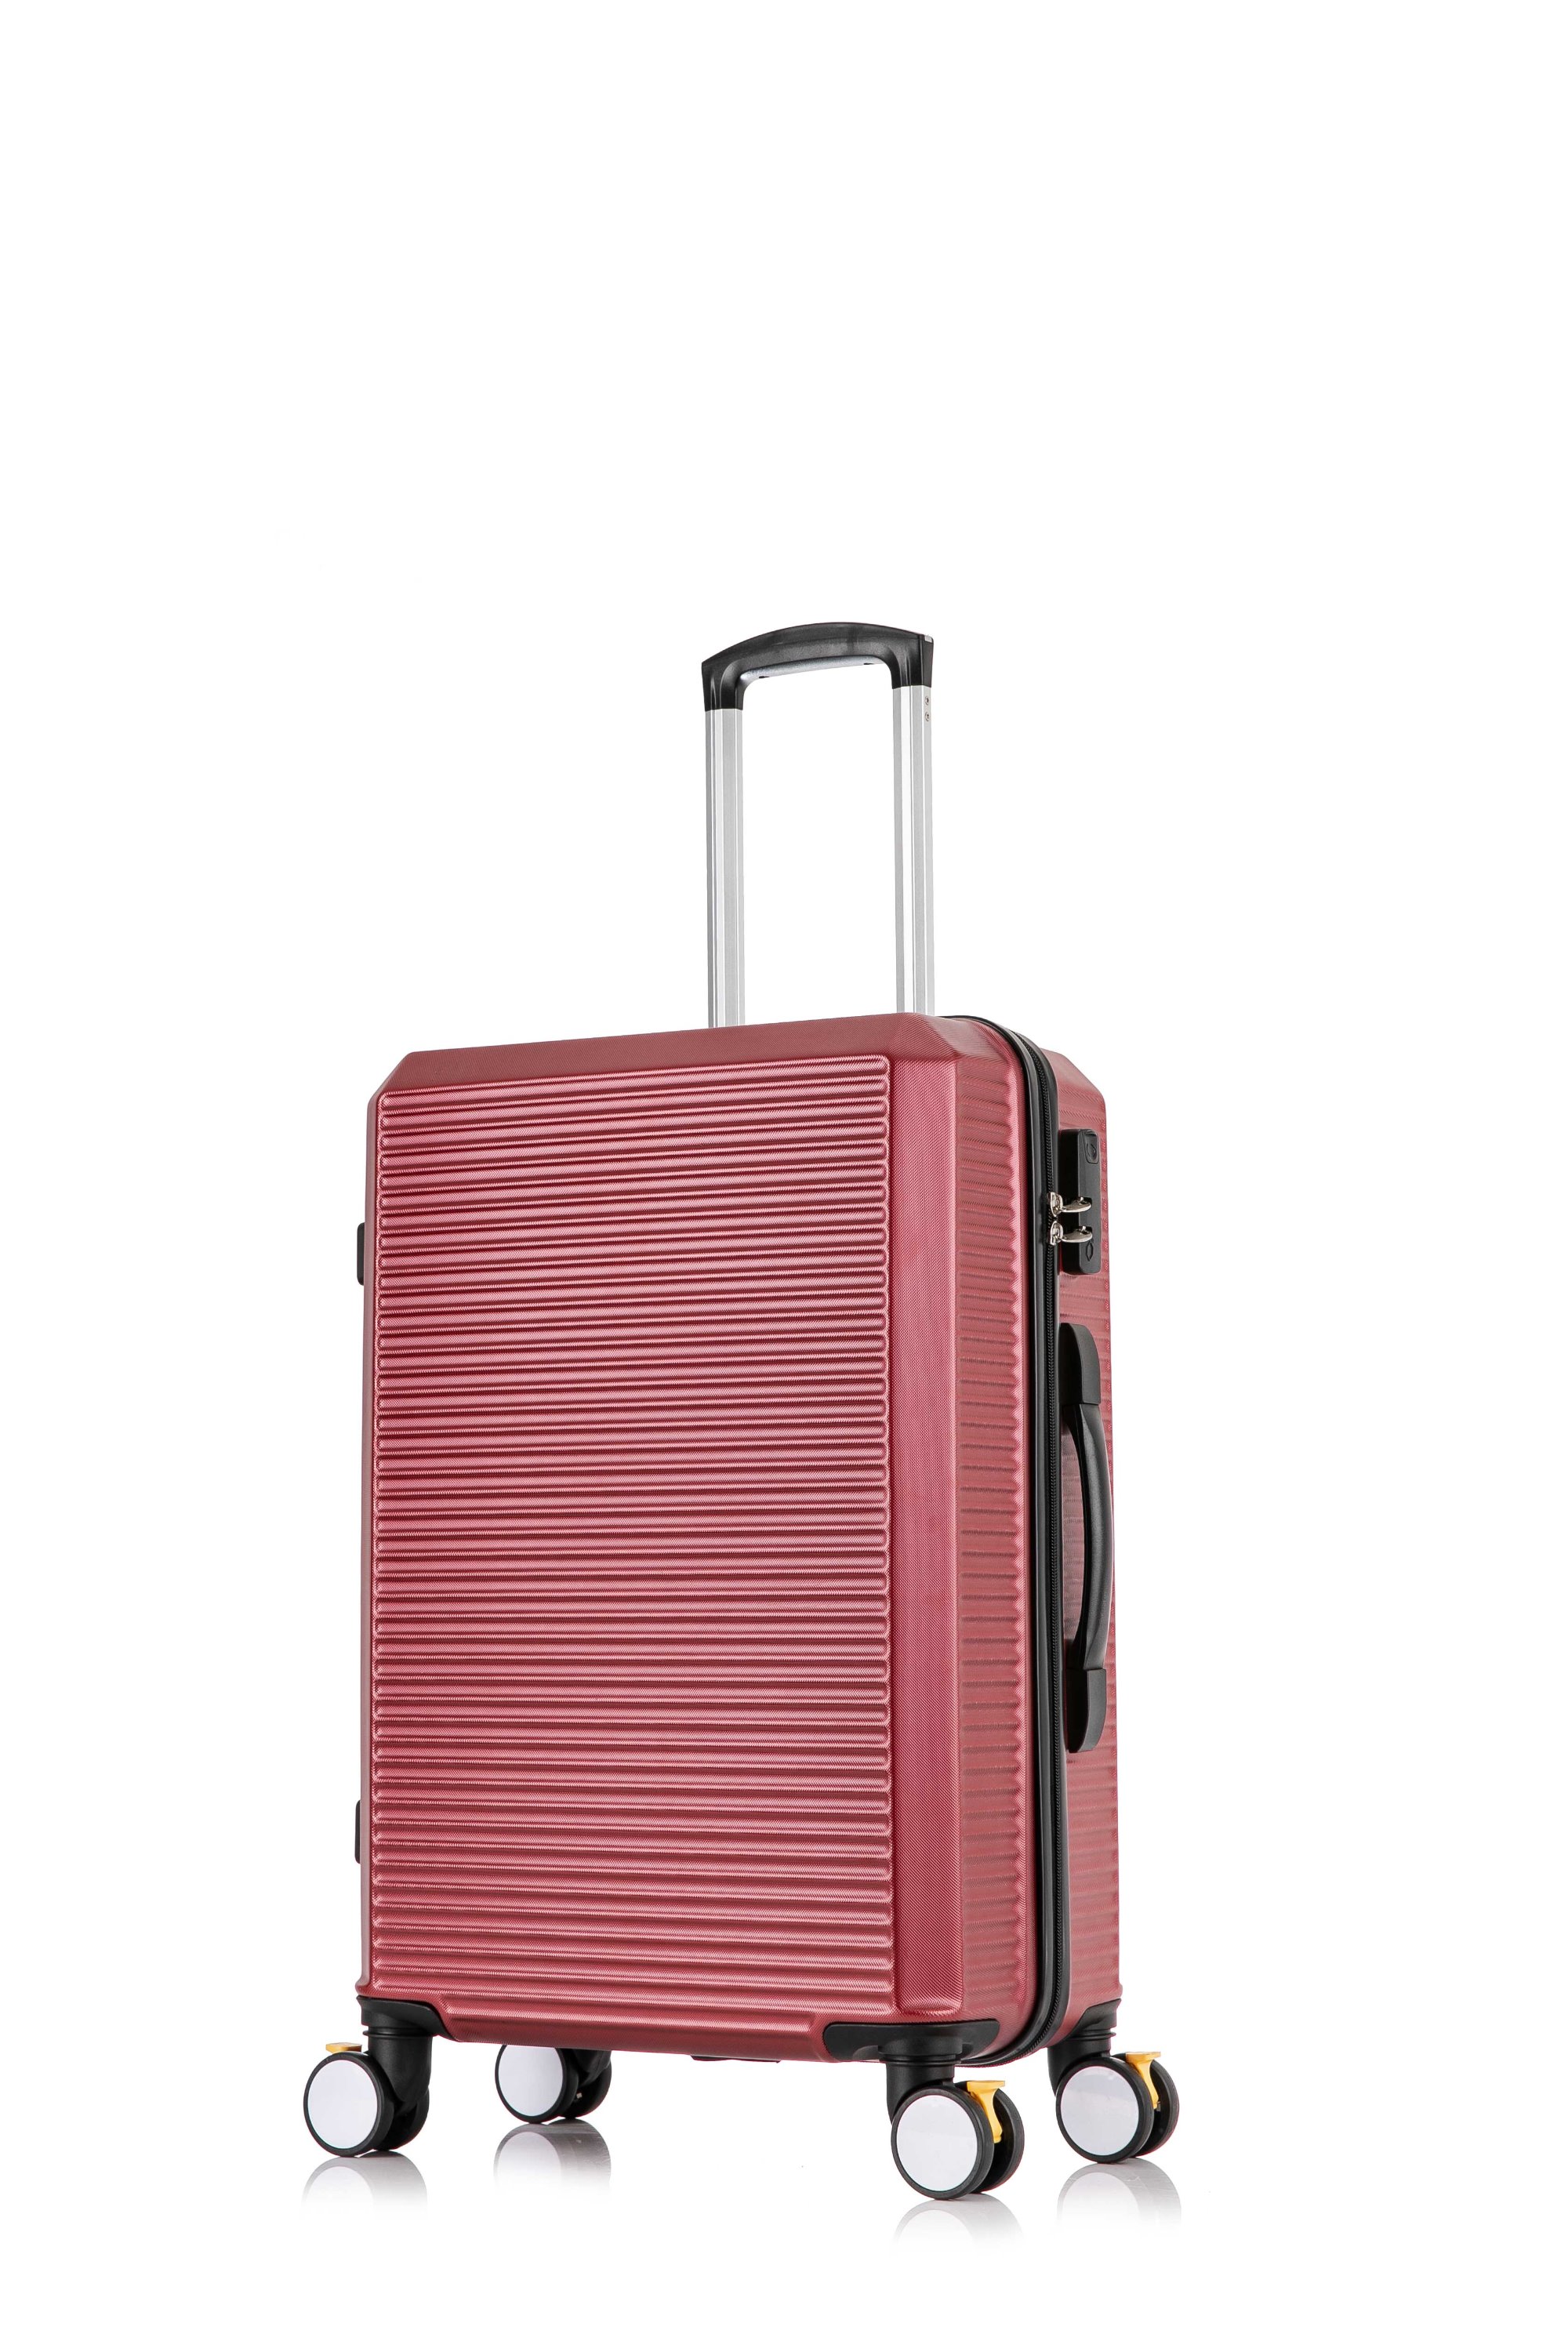 Traveler's Choice - ABS Luggage - 1005